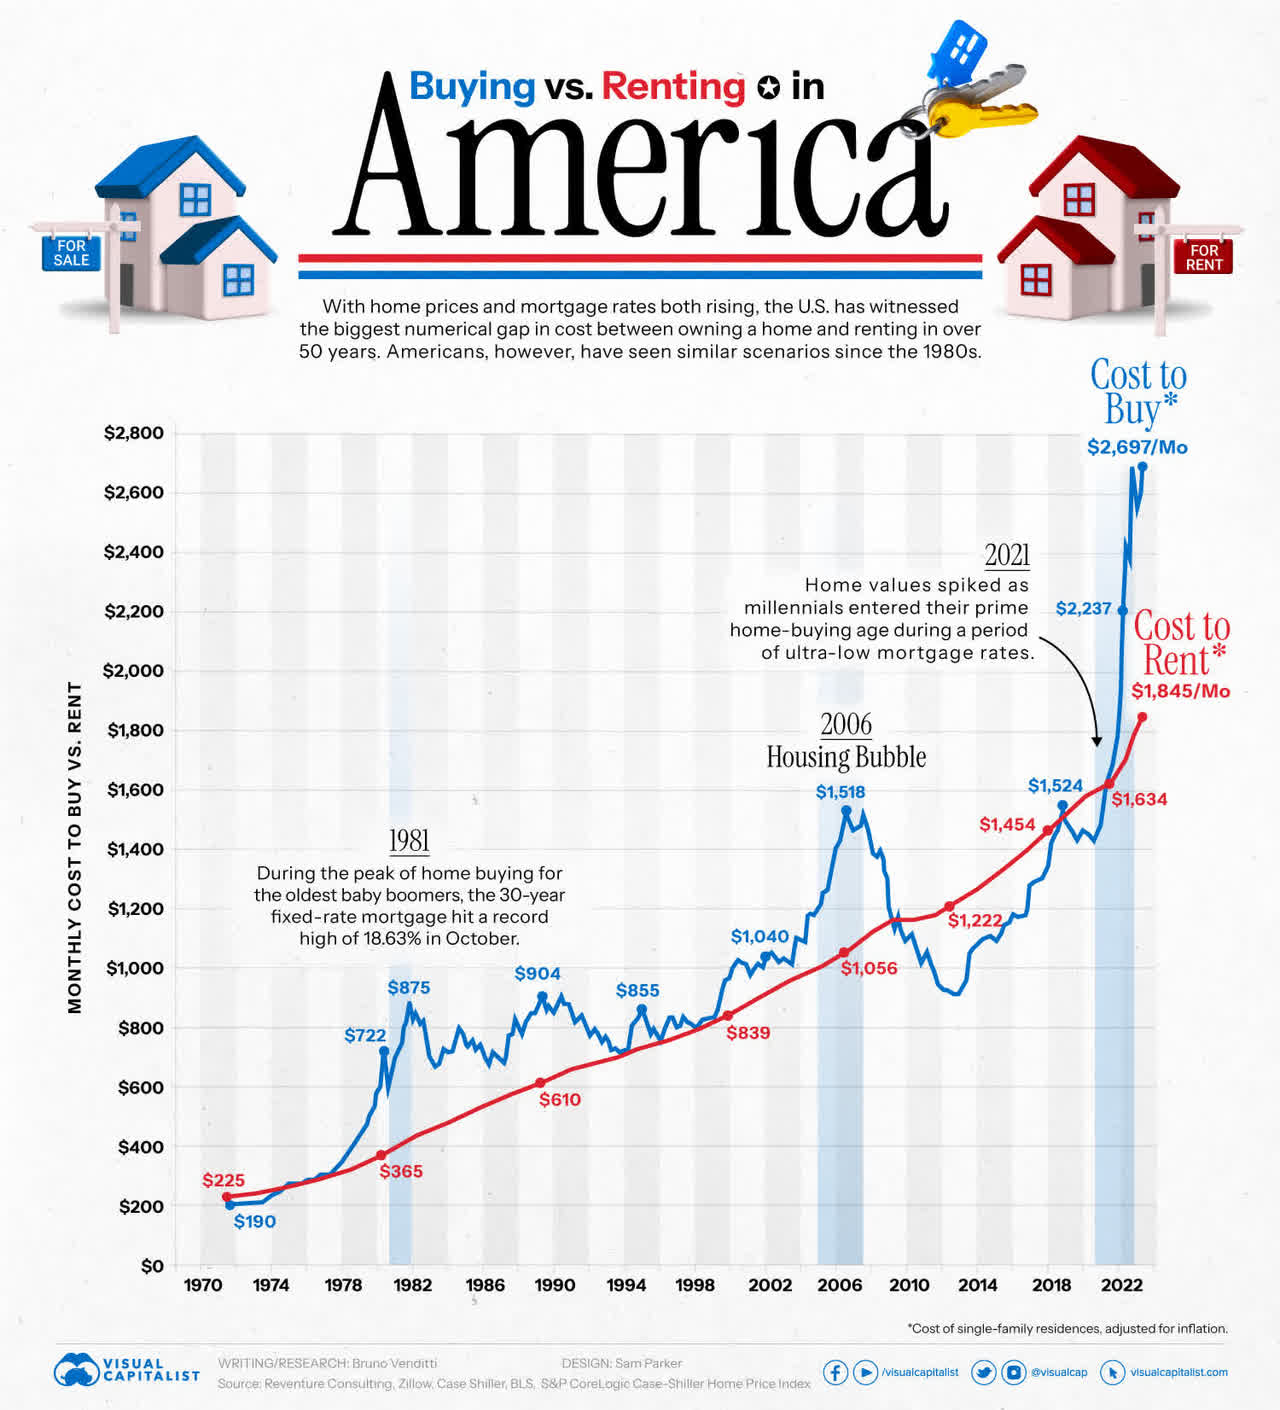 Buy or rent America?